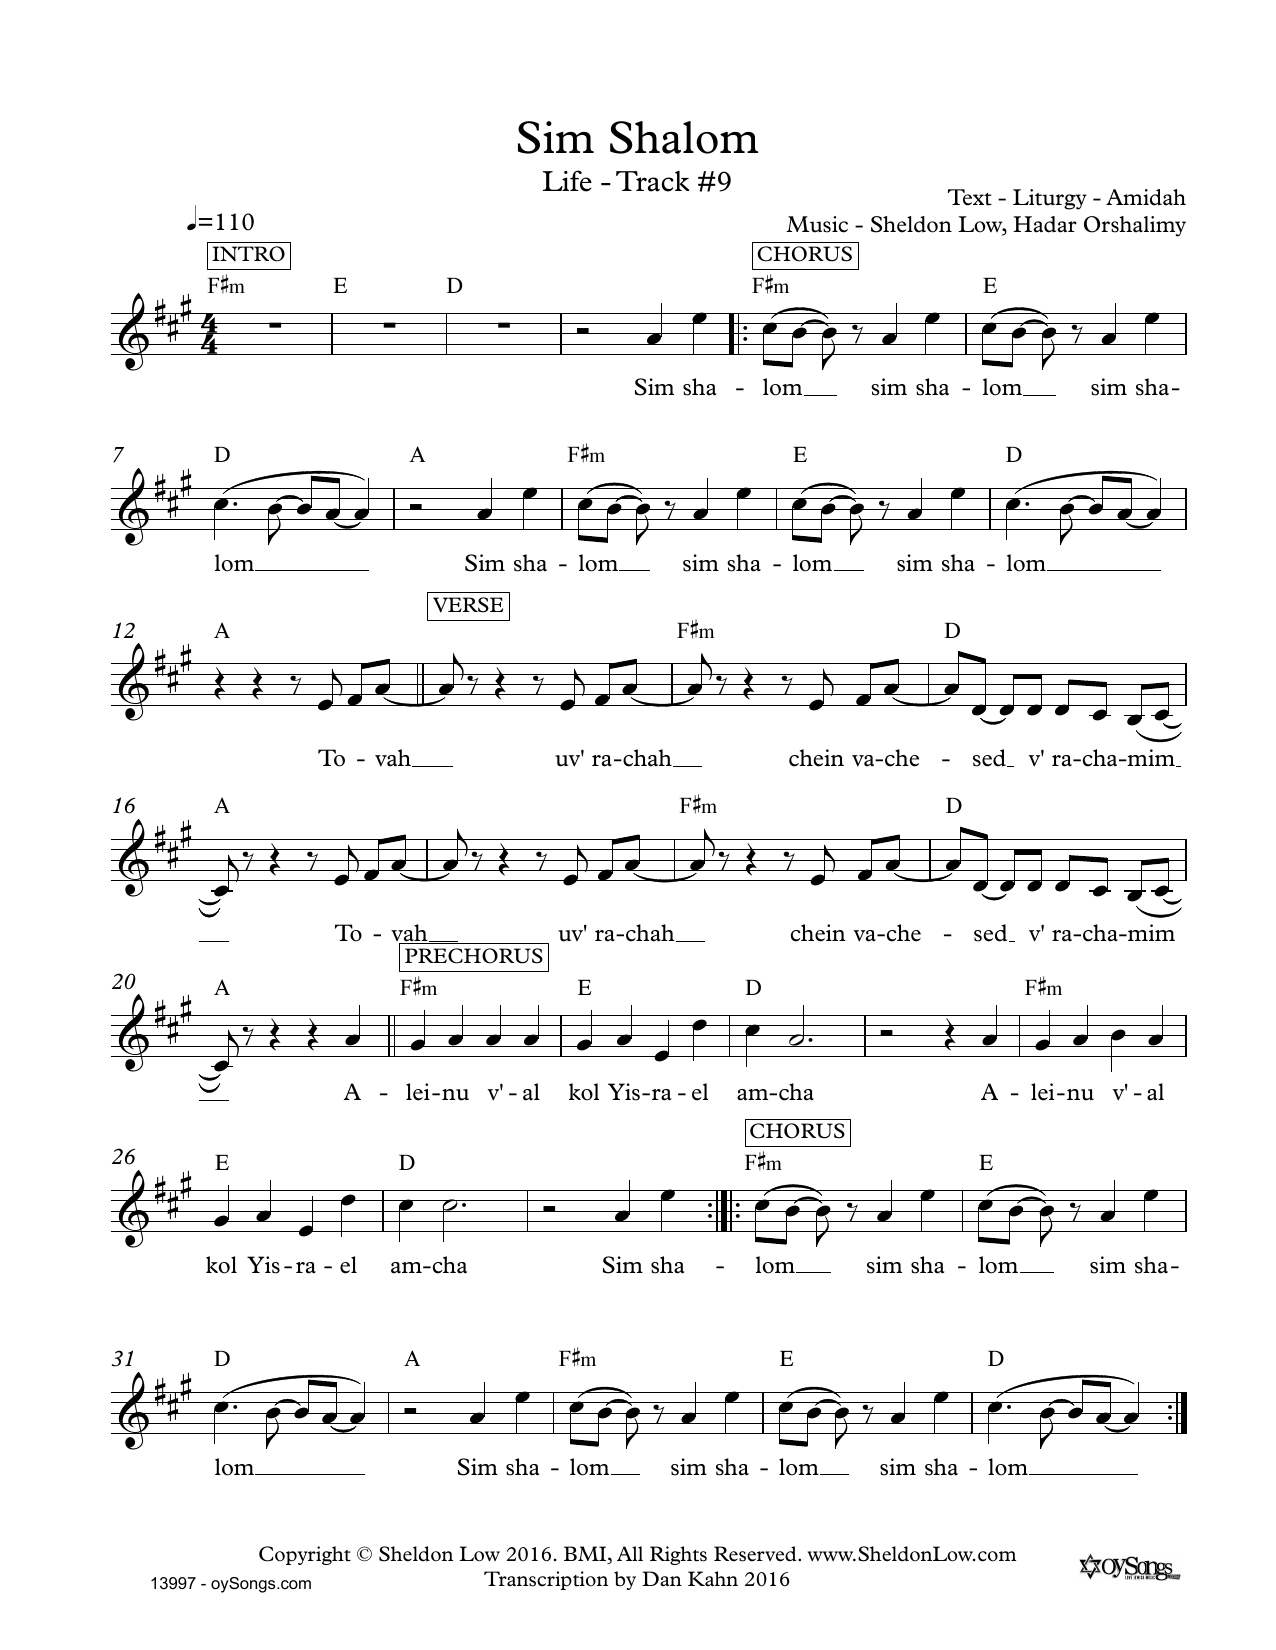 Sheldon Low Sim Shalom Sheet Music Notes & Chords for Lead Sheet / Fake Book - Download or Print PDF